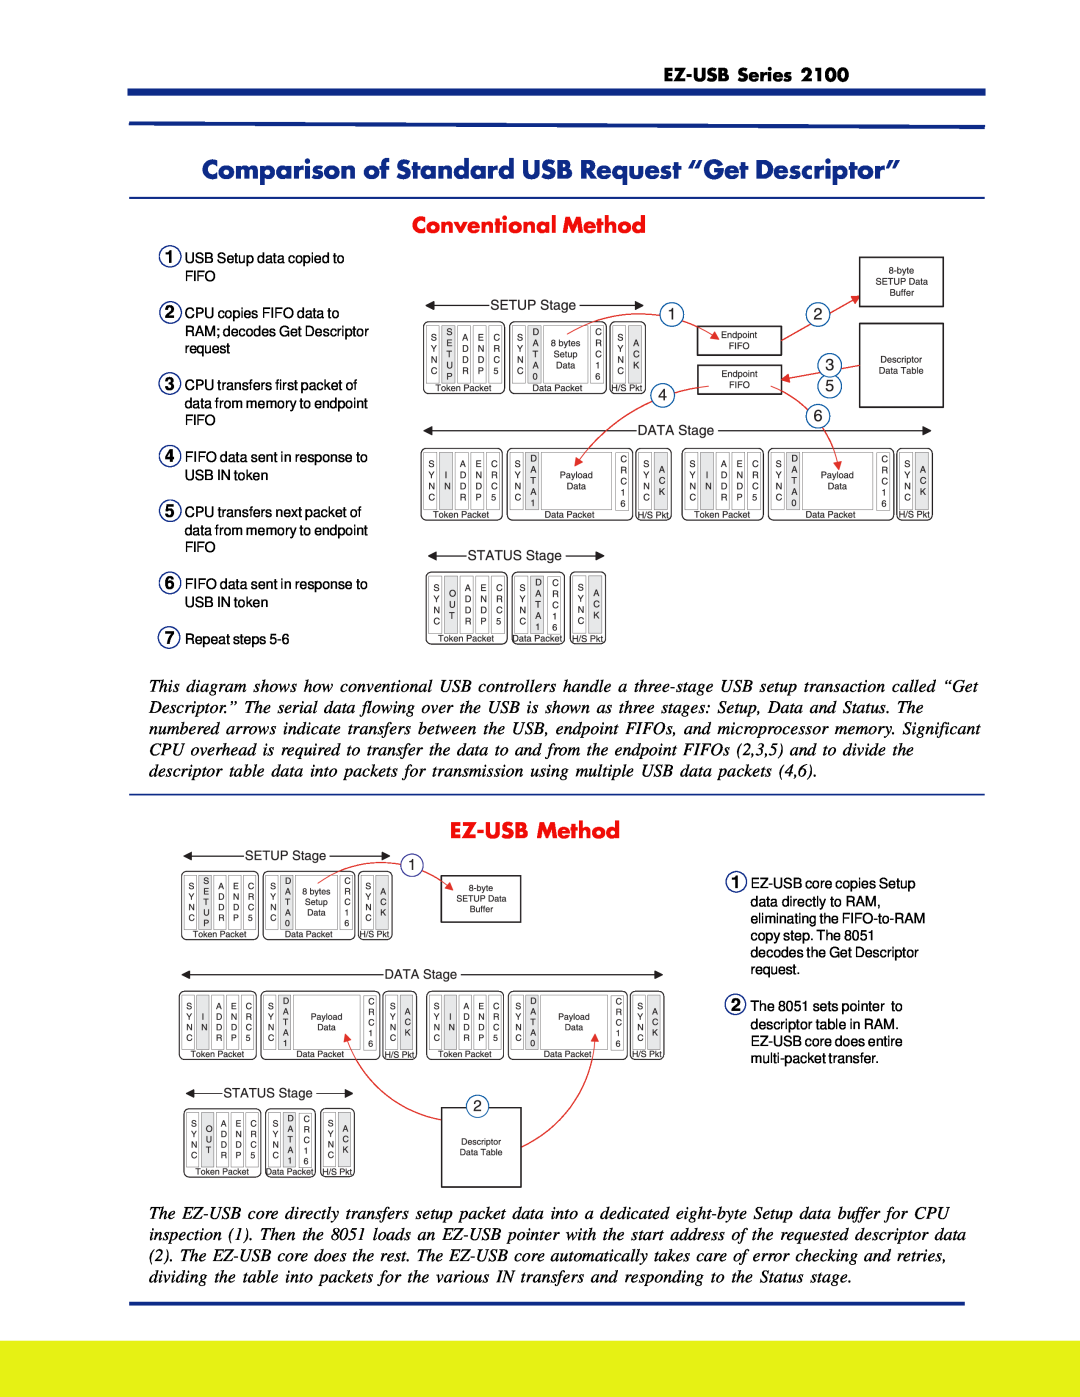 Cypress 2100 manual Comparison of Standard USB Request “Get Descriptor”, Conventional Method, EZ-USB Method, EZ-USB Series 